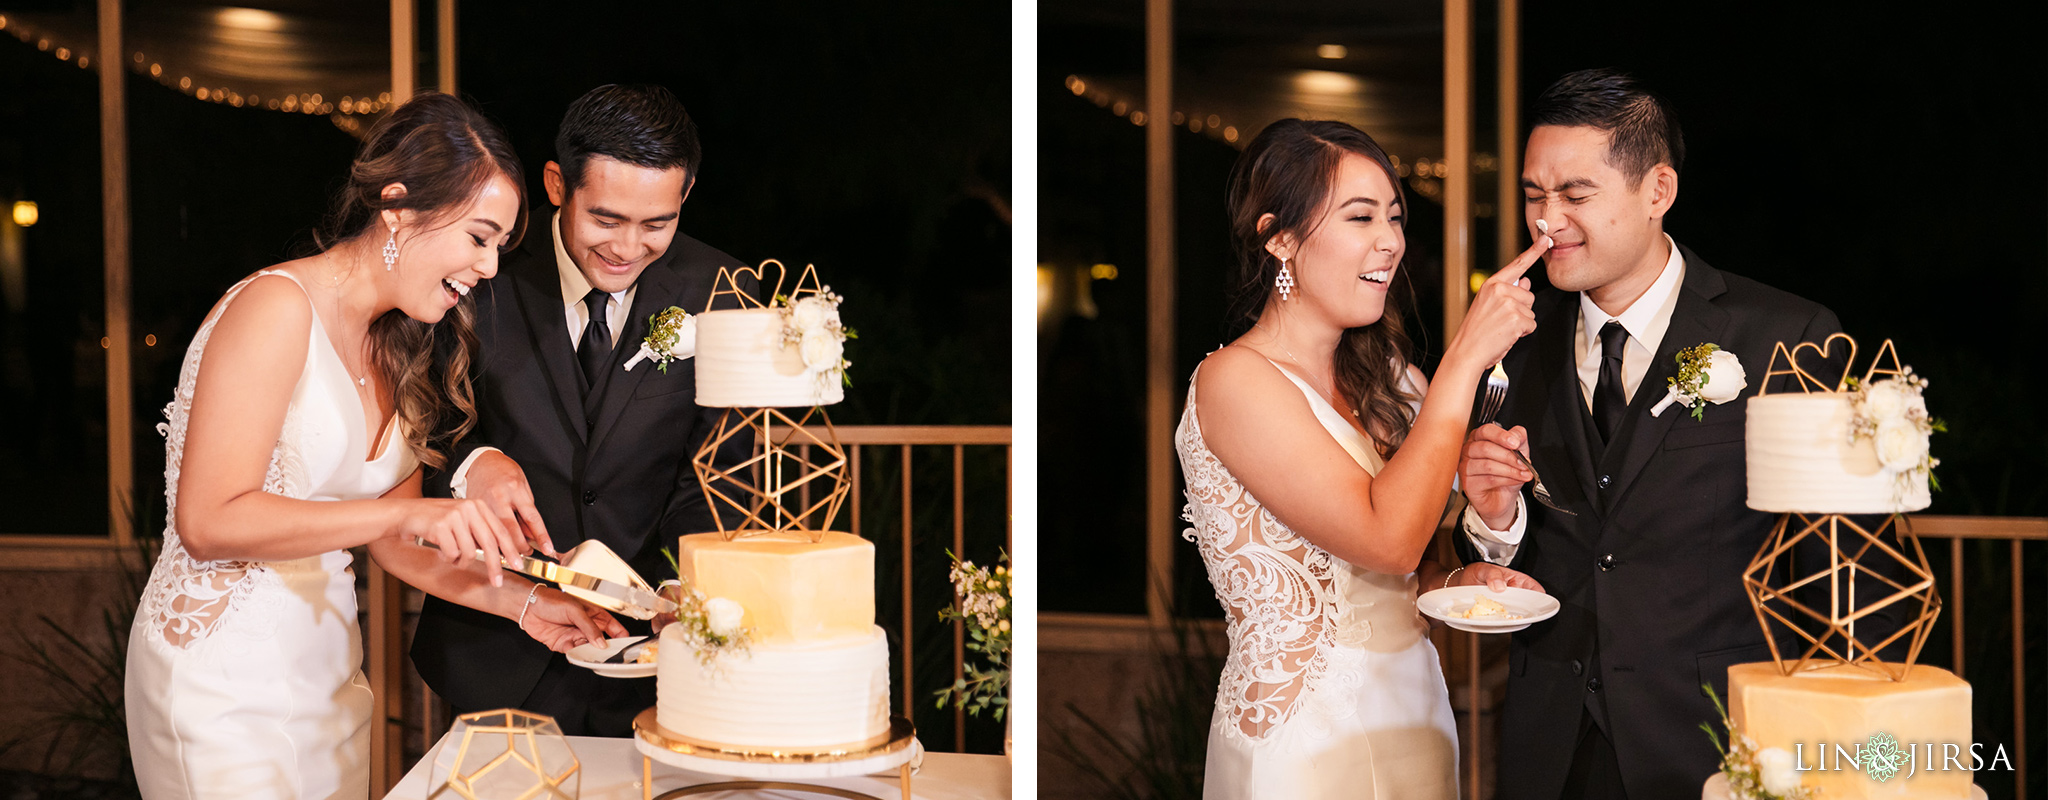 Coto de Caza Golf Club Wedding Photography Cake Cutting